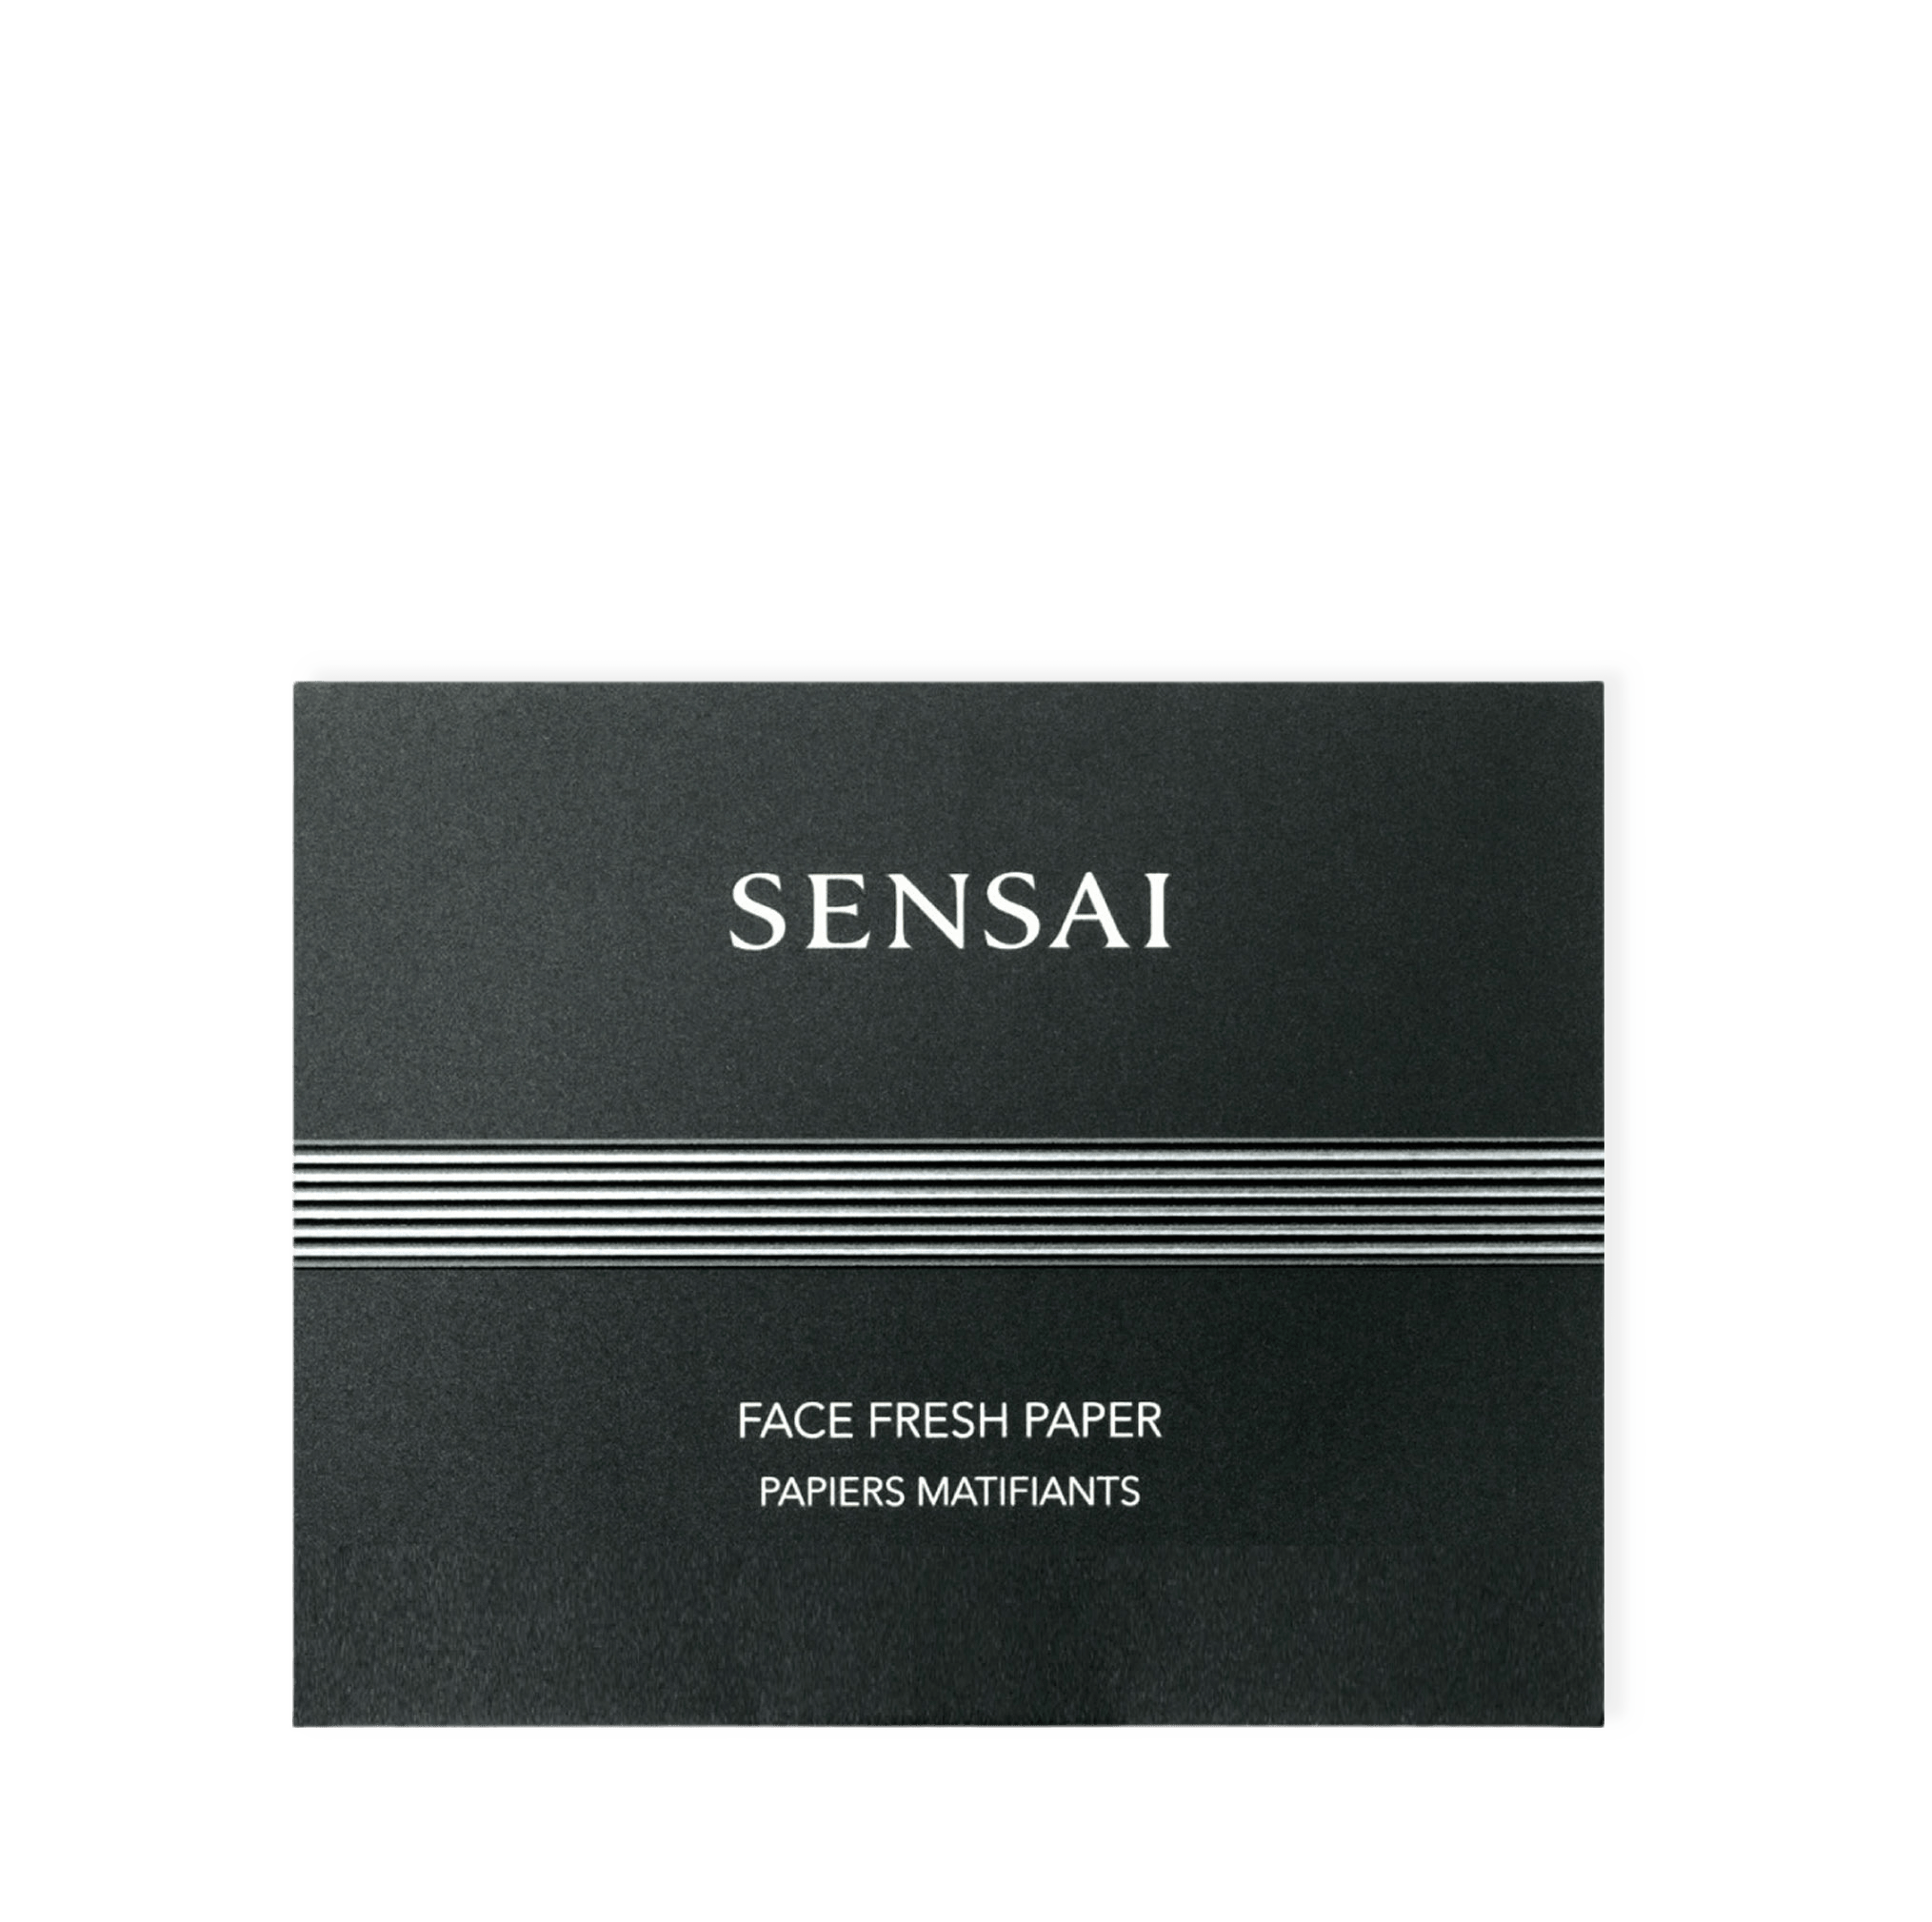 Face Fresh Paper från Sensai